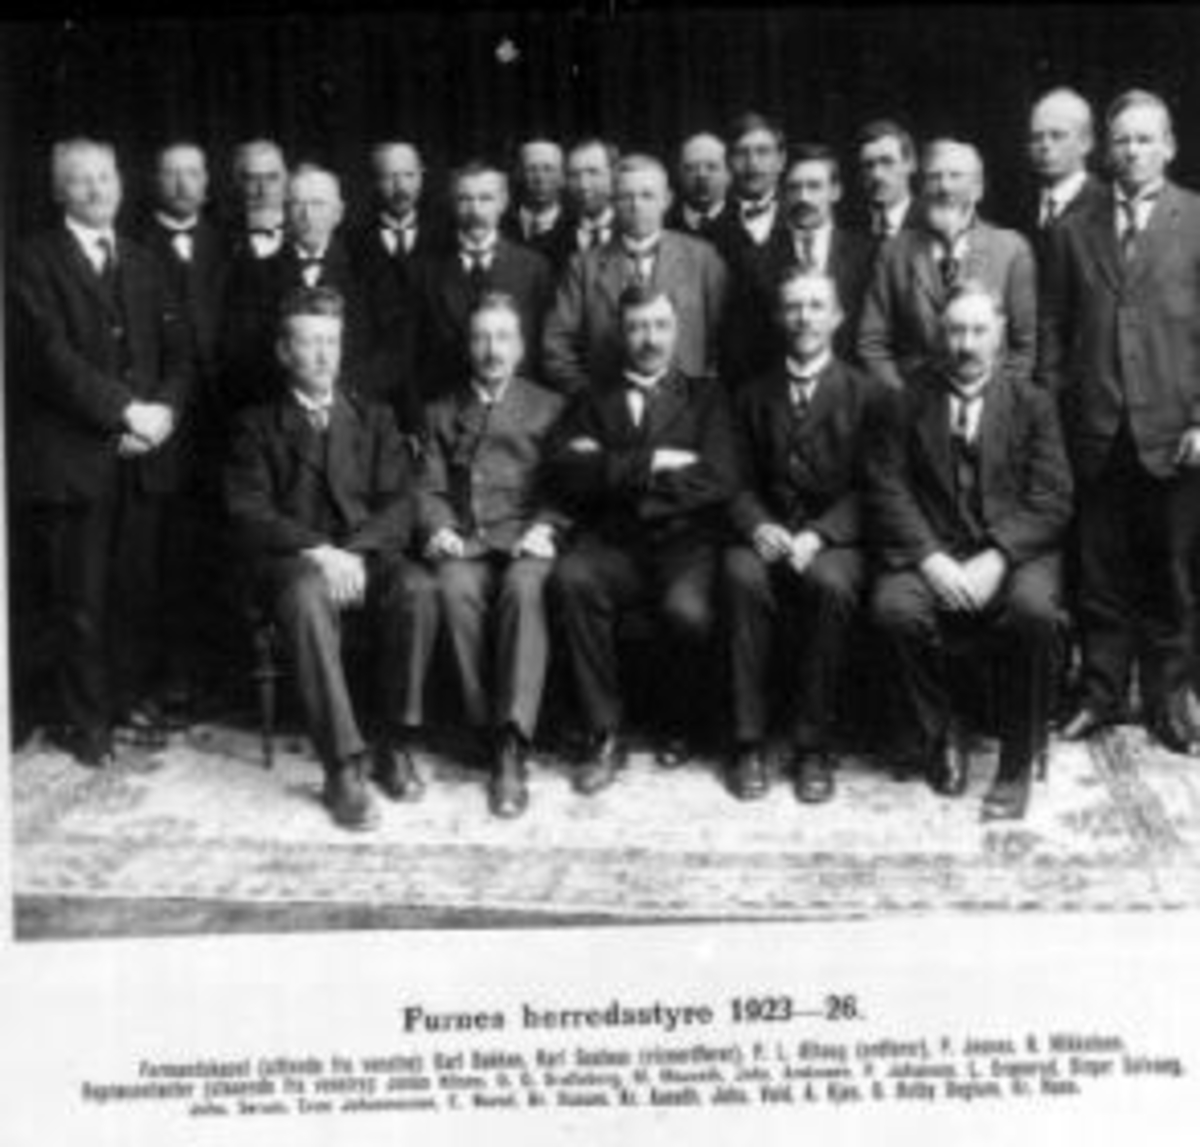 Furnes herredstyre 1923-1926. Sittende fra venstre er Karl Bakken, Karl Gaalaas, ordfører P.L. Alhaug, P. Jesnes, N. Mikkelsen. Bak fra venstre er Julius Nilsen, O.O. Bratteberg, M. Mauseth, Johs Arnkværn, P. Johansen, L. Granerud, Birger Solvang, Johs. Sørum, Even Johannessen, E. Narud, K. Huusum, Kr. Aaseth, Johs. Vold, A. Kjøs, O. Østby Deglum, Kr. Huse.